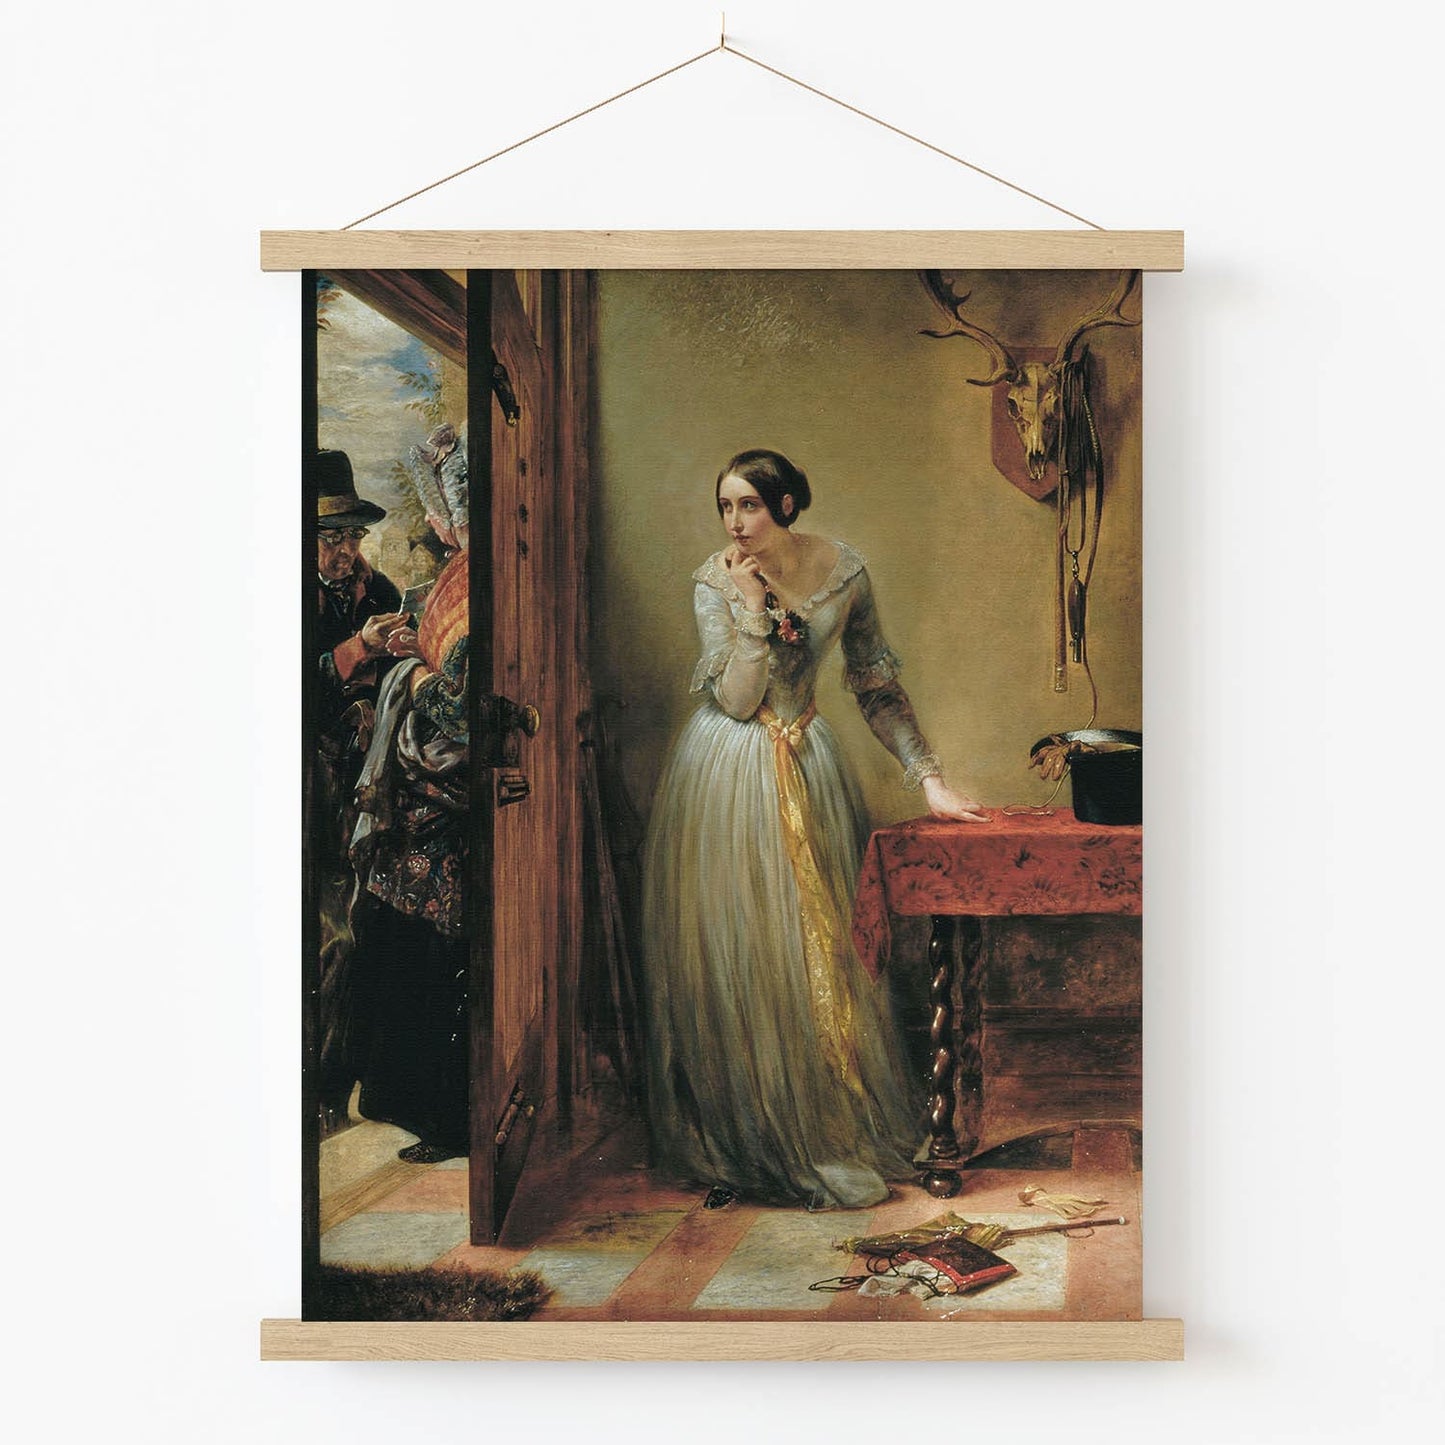 Victorian Era Mystery Art Print in Wood Hanger Frame on Wall